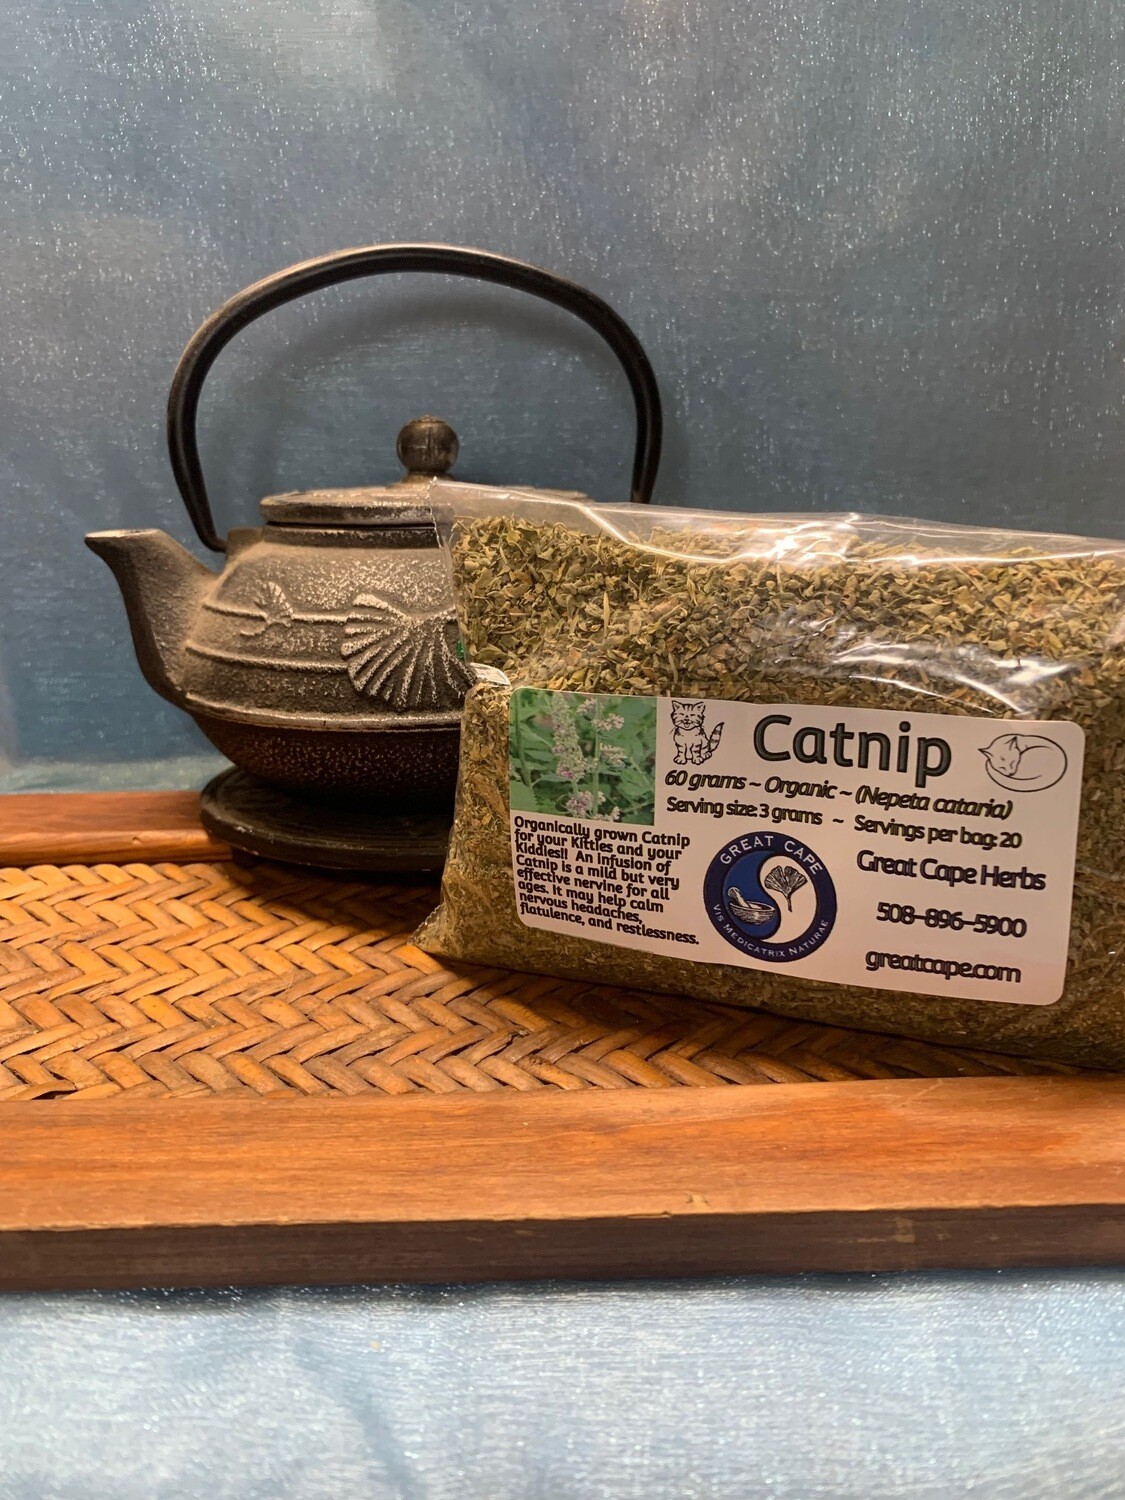 Catnip Tea